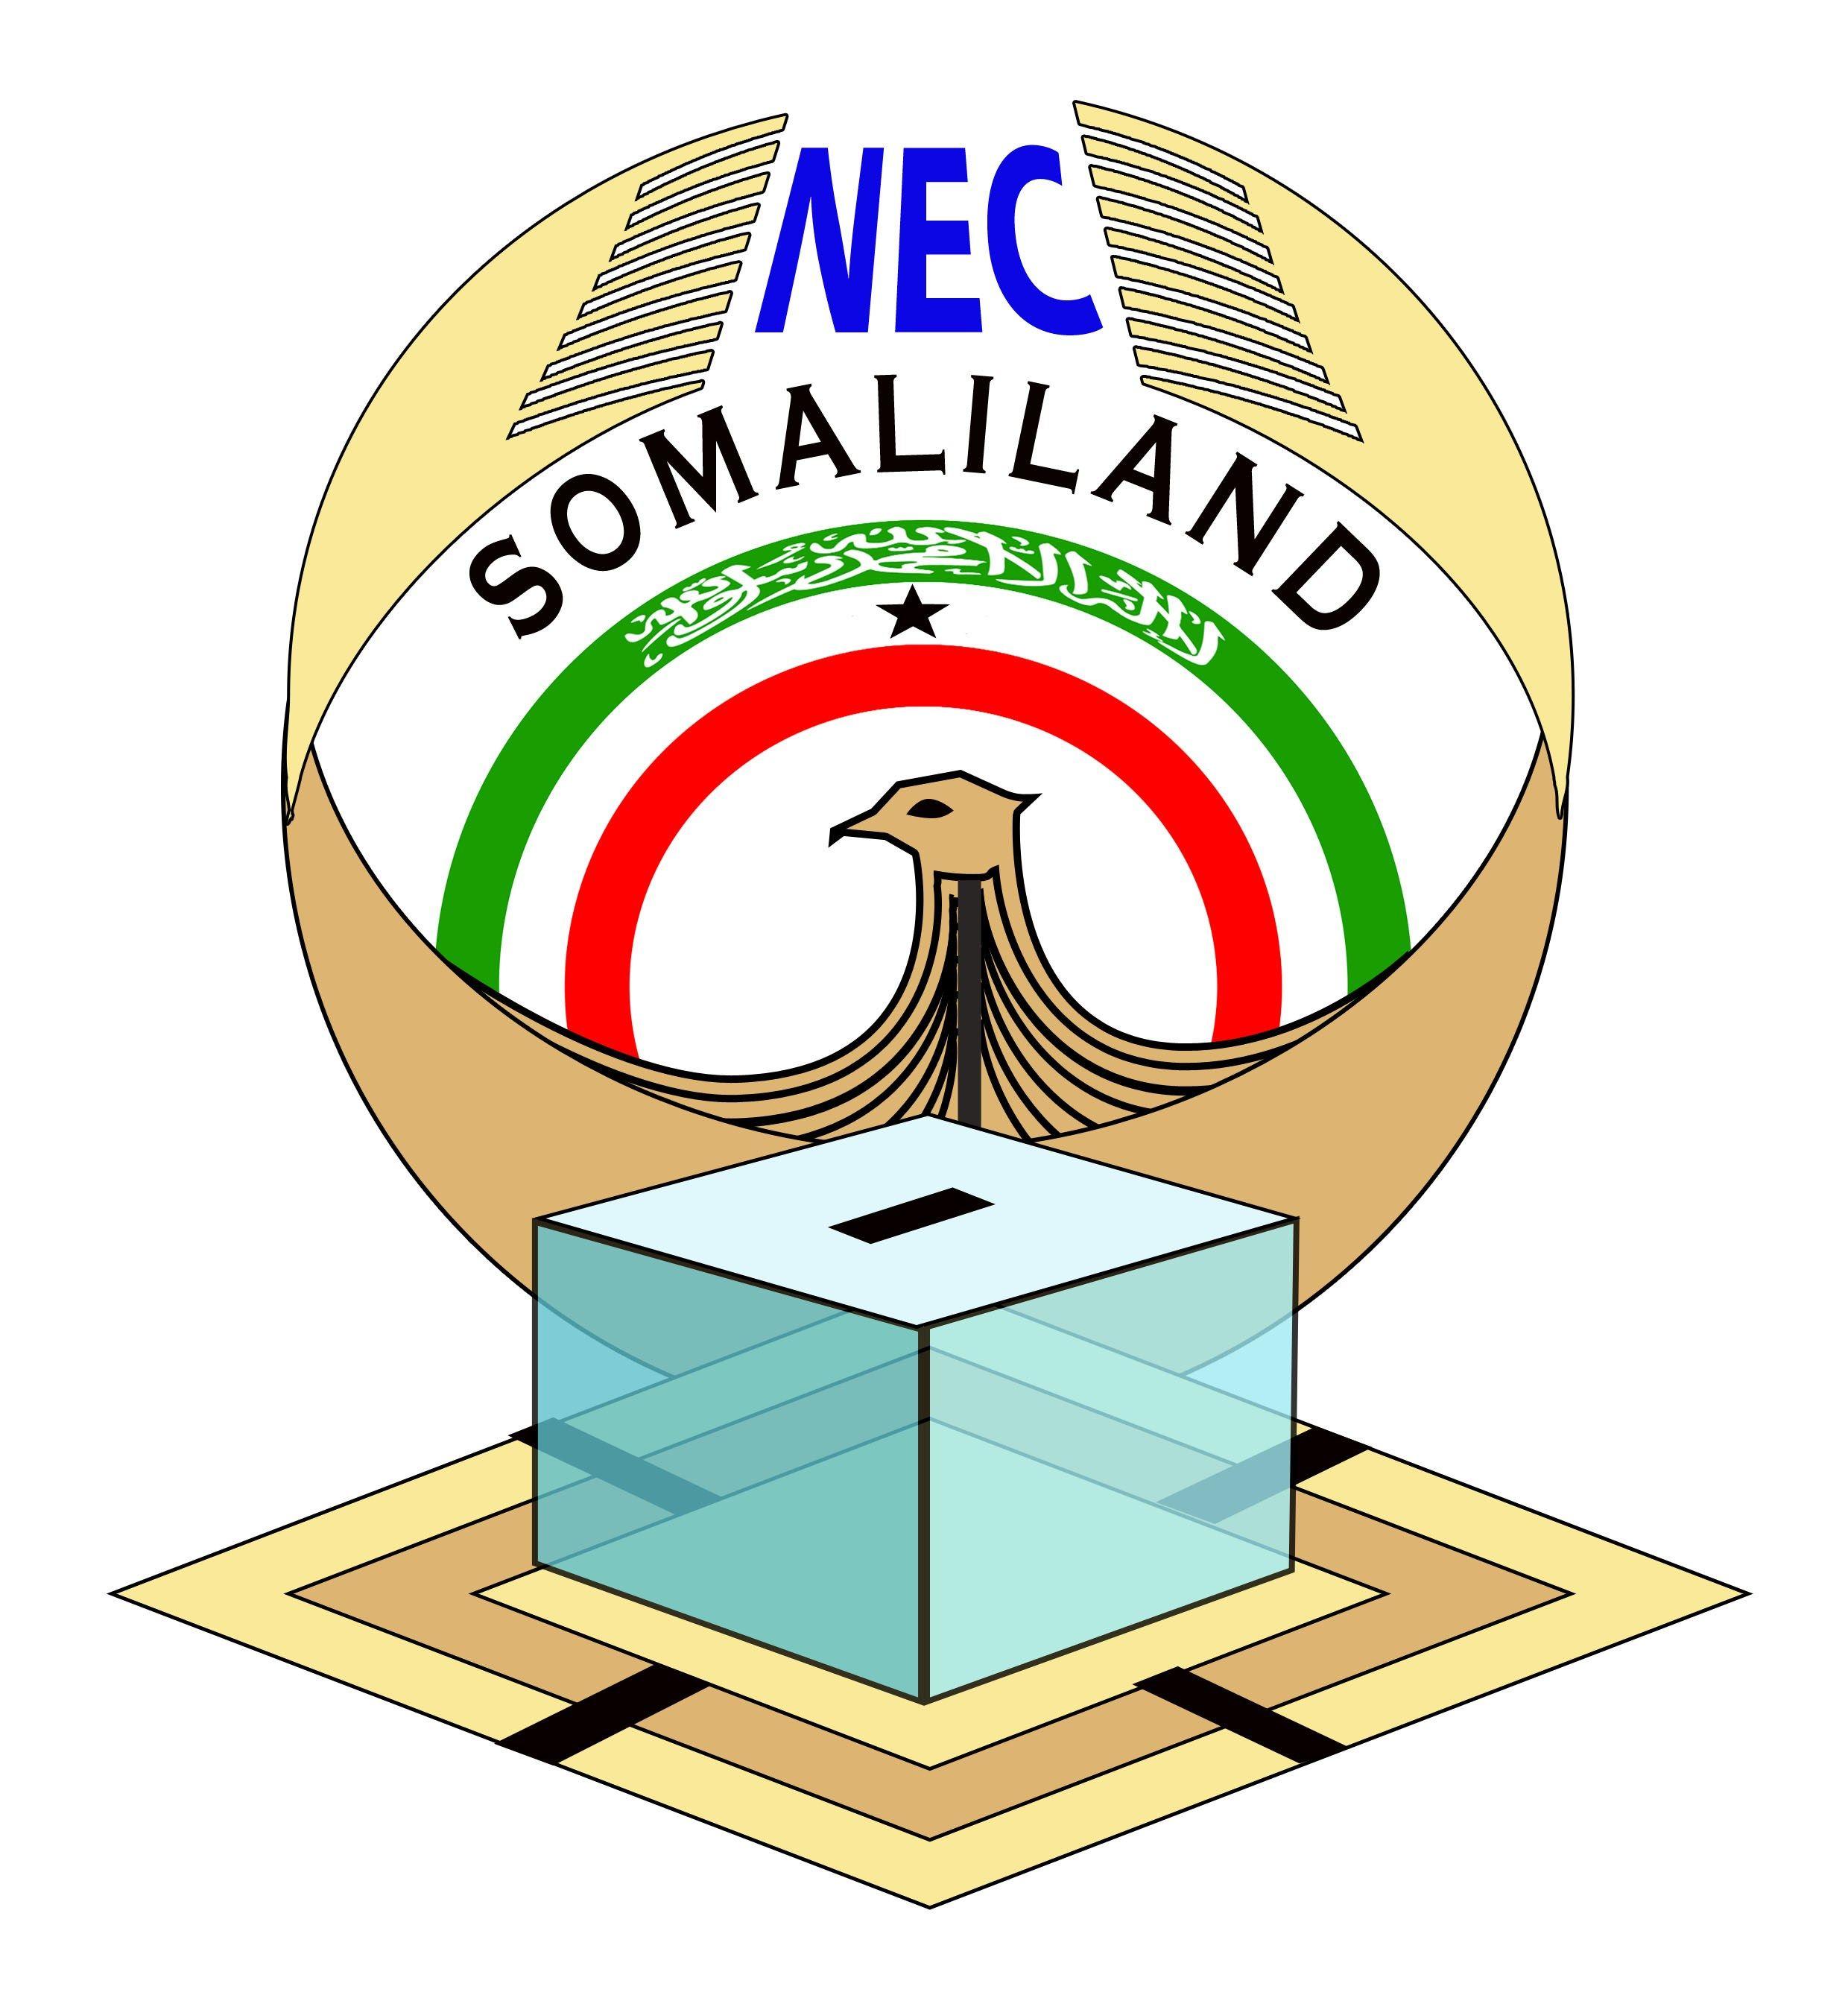 NEC Logo - FInal nec logo - Somaliland National Electoral Commission